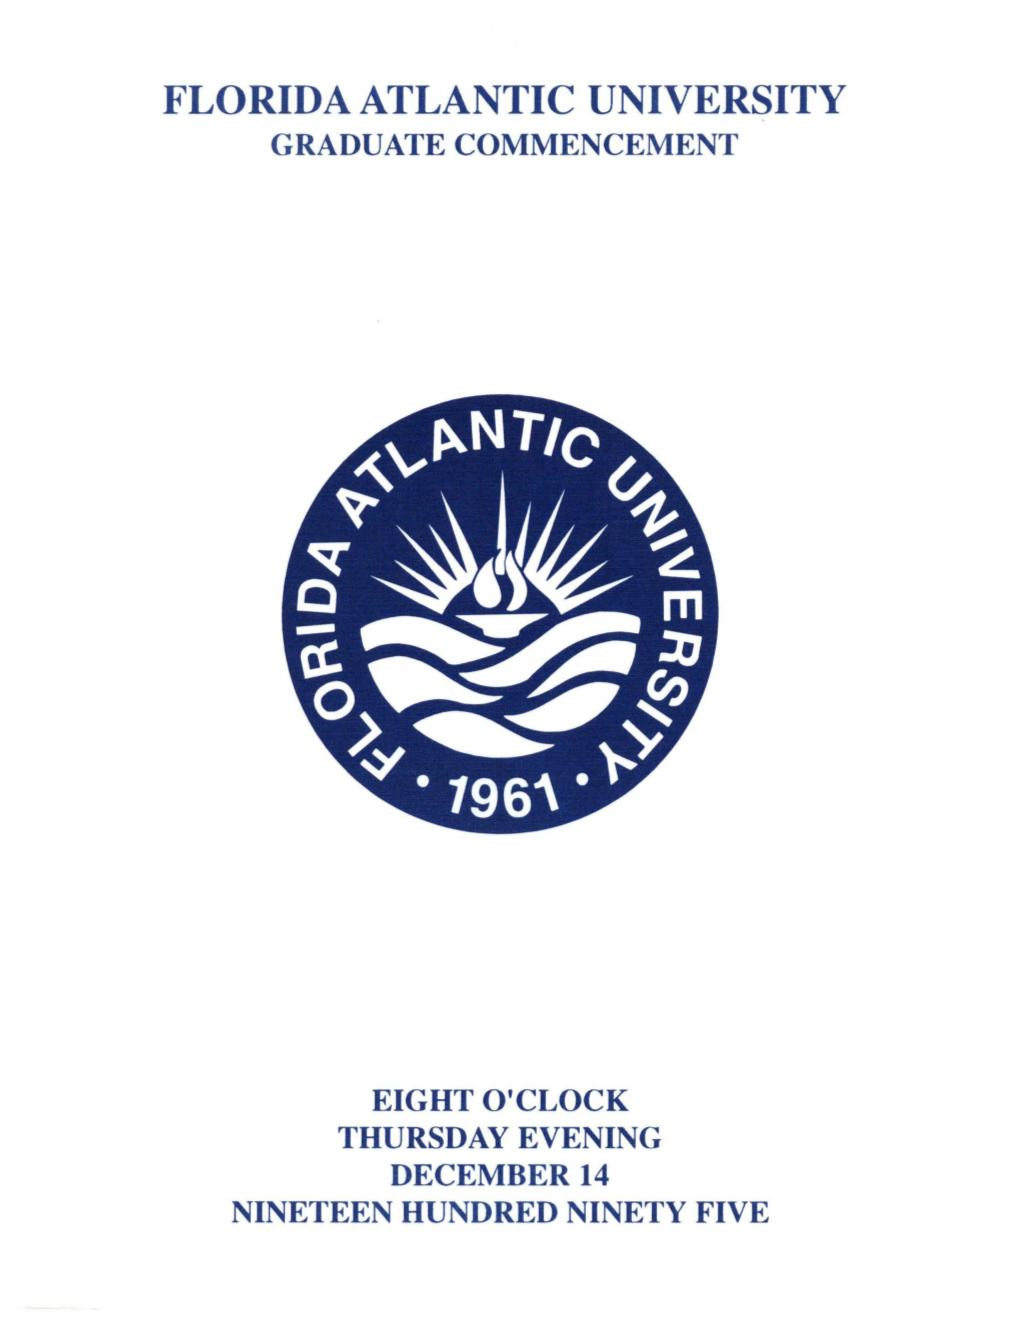 Florida Atlantic University Graduate Commencement